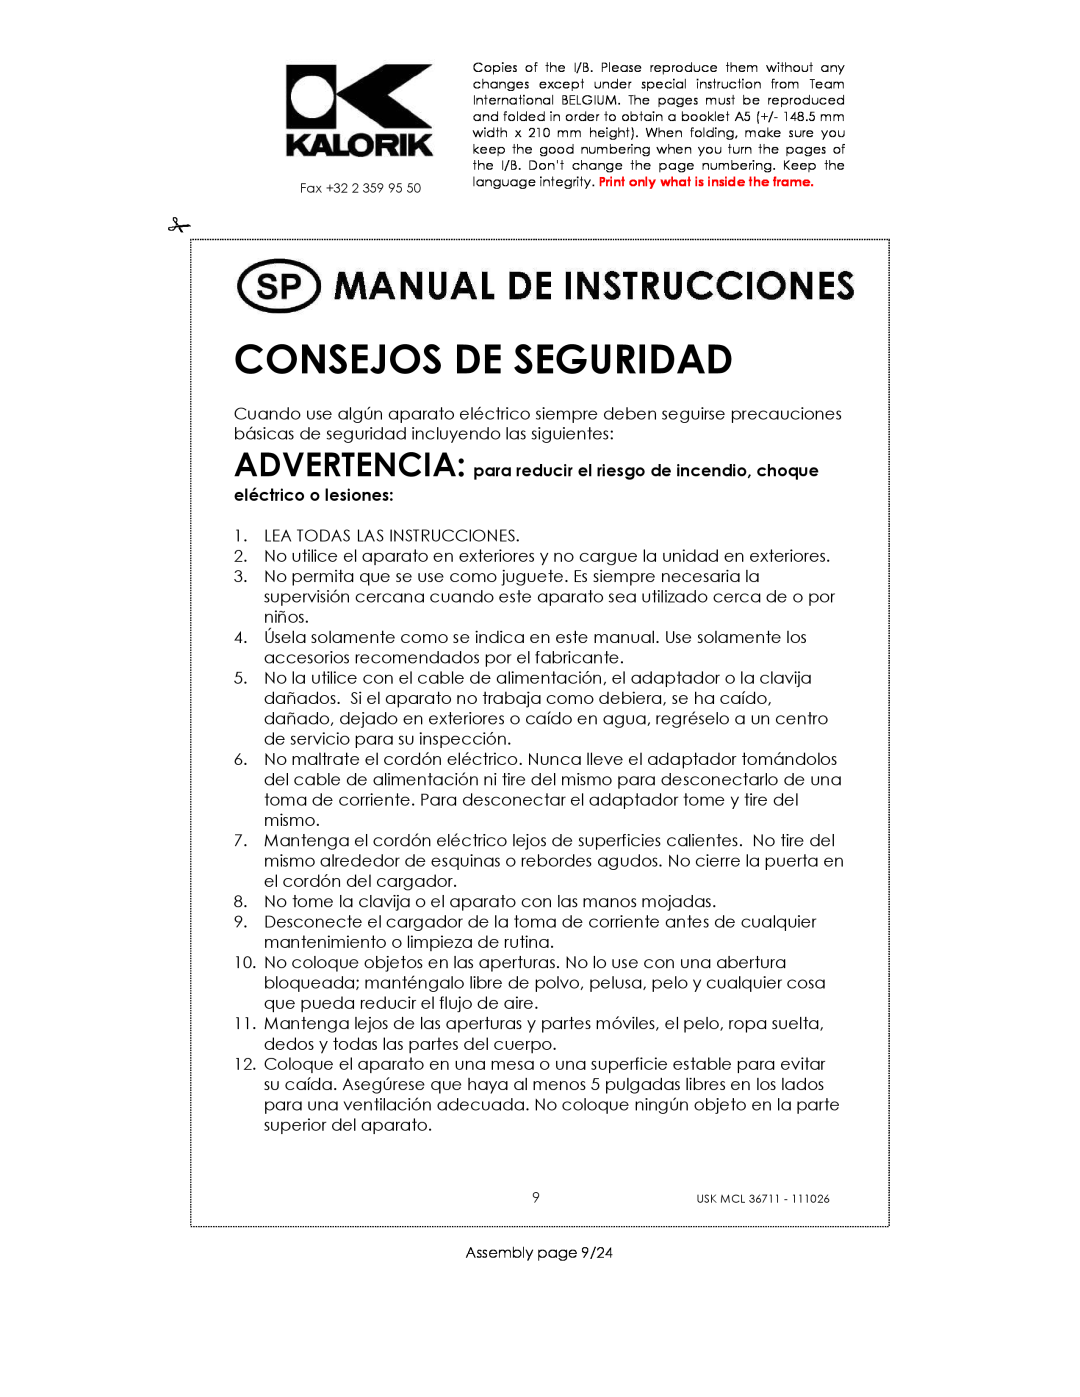 Kalorik USK MCL 36711 manual Consejos De Seguridad 